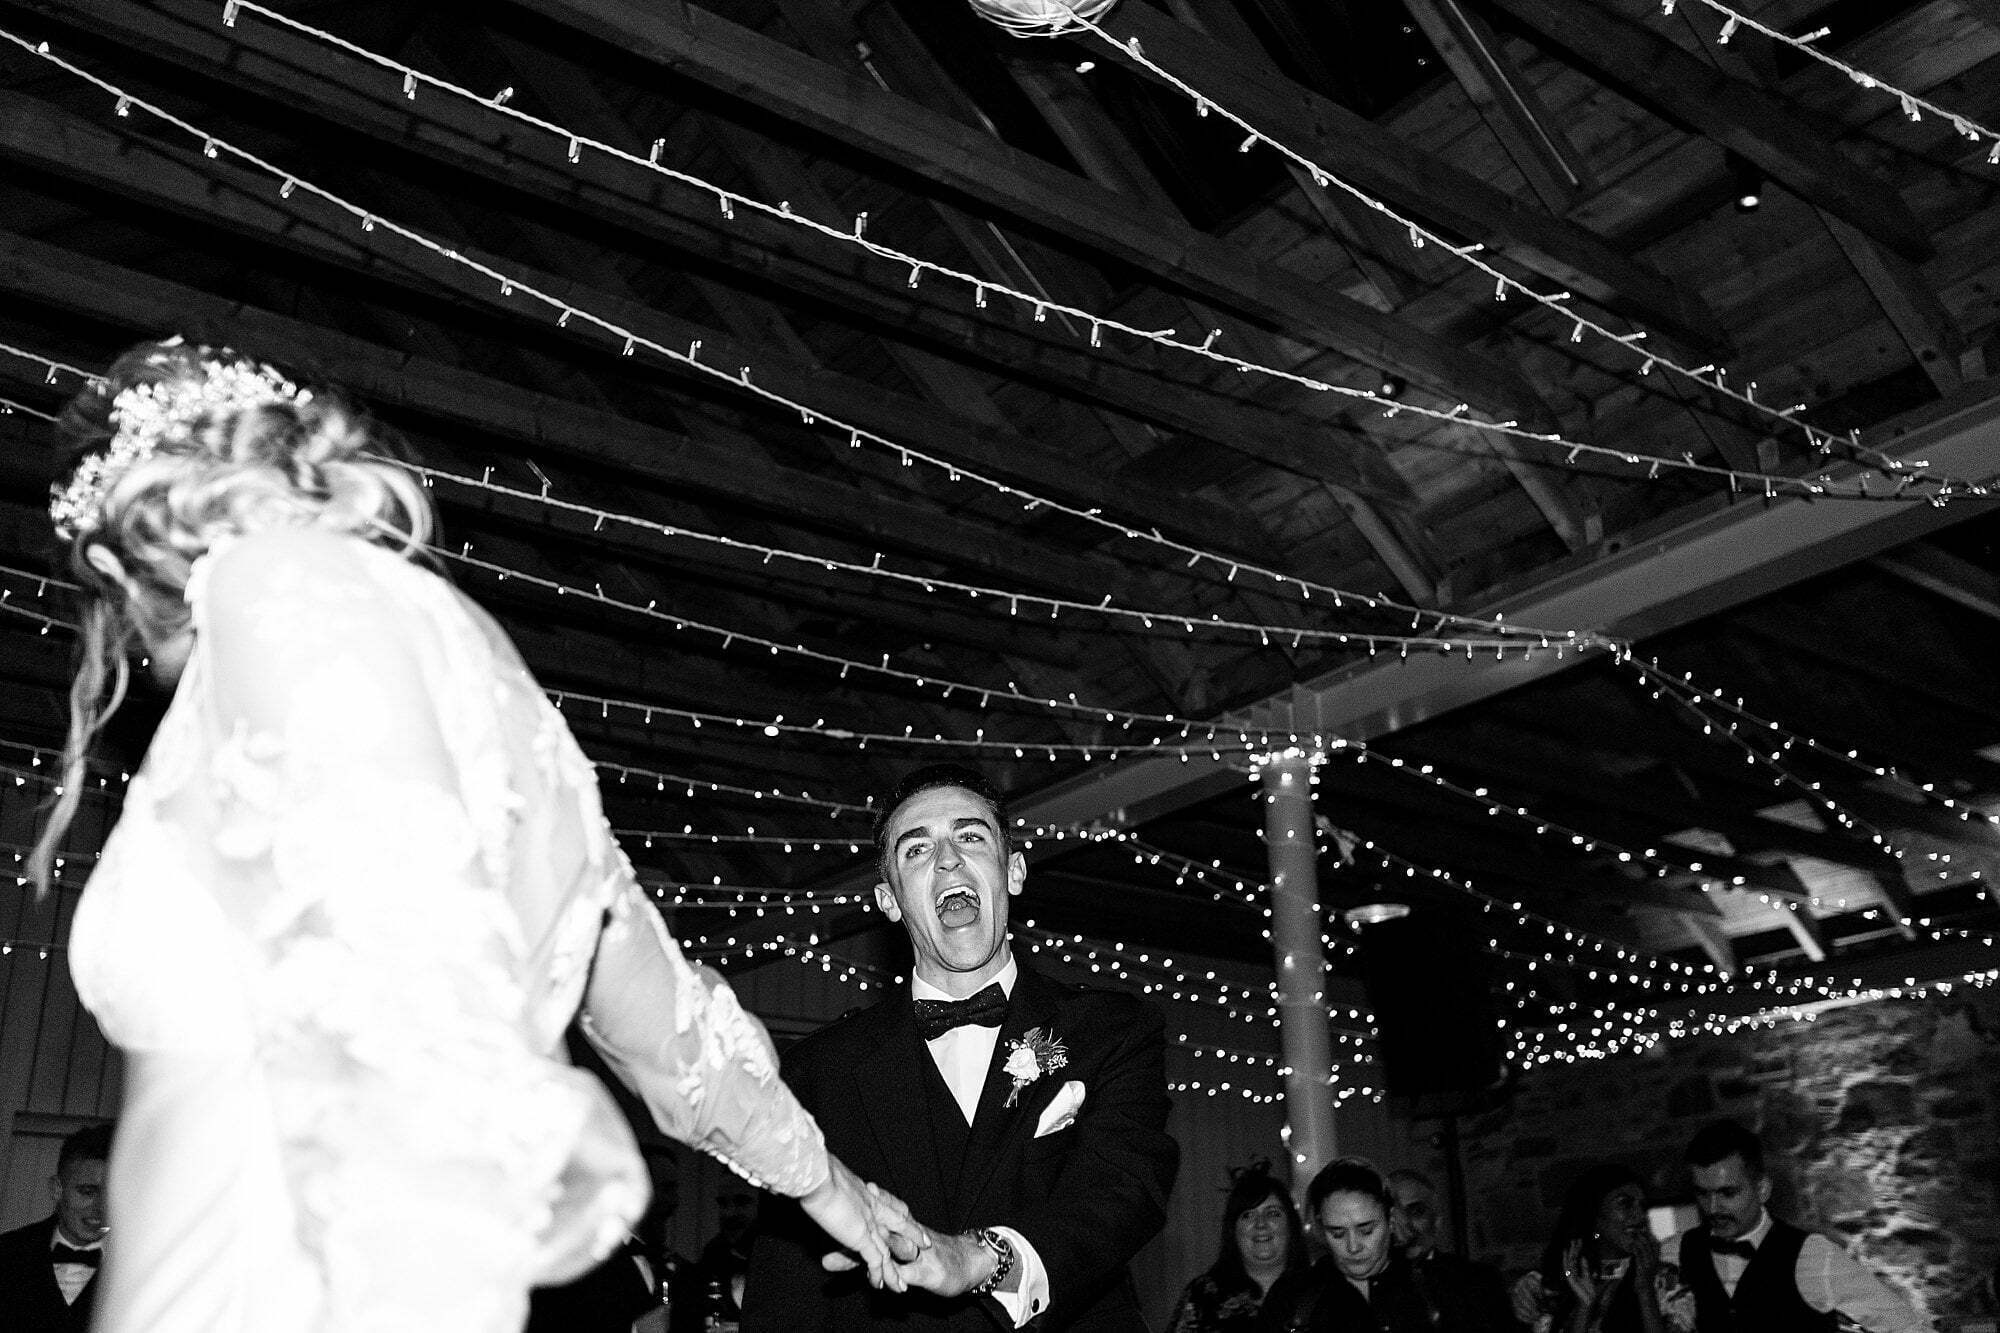 guardswell farm winter wedding bride groom first dance